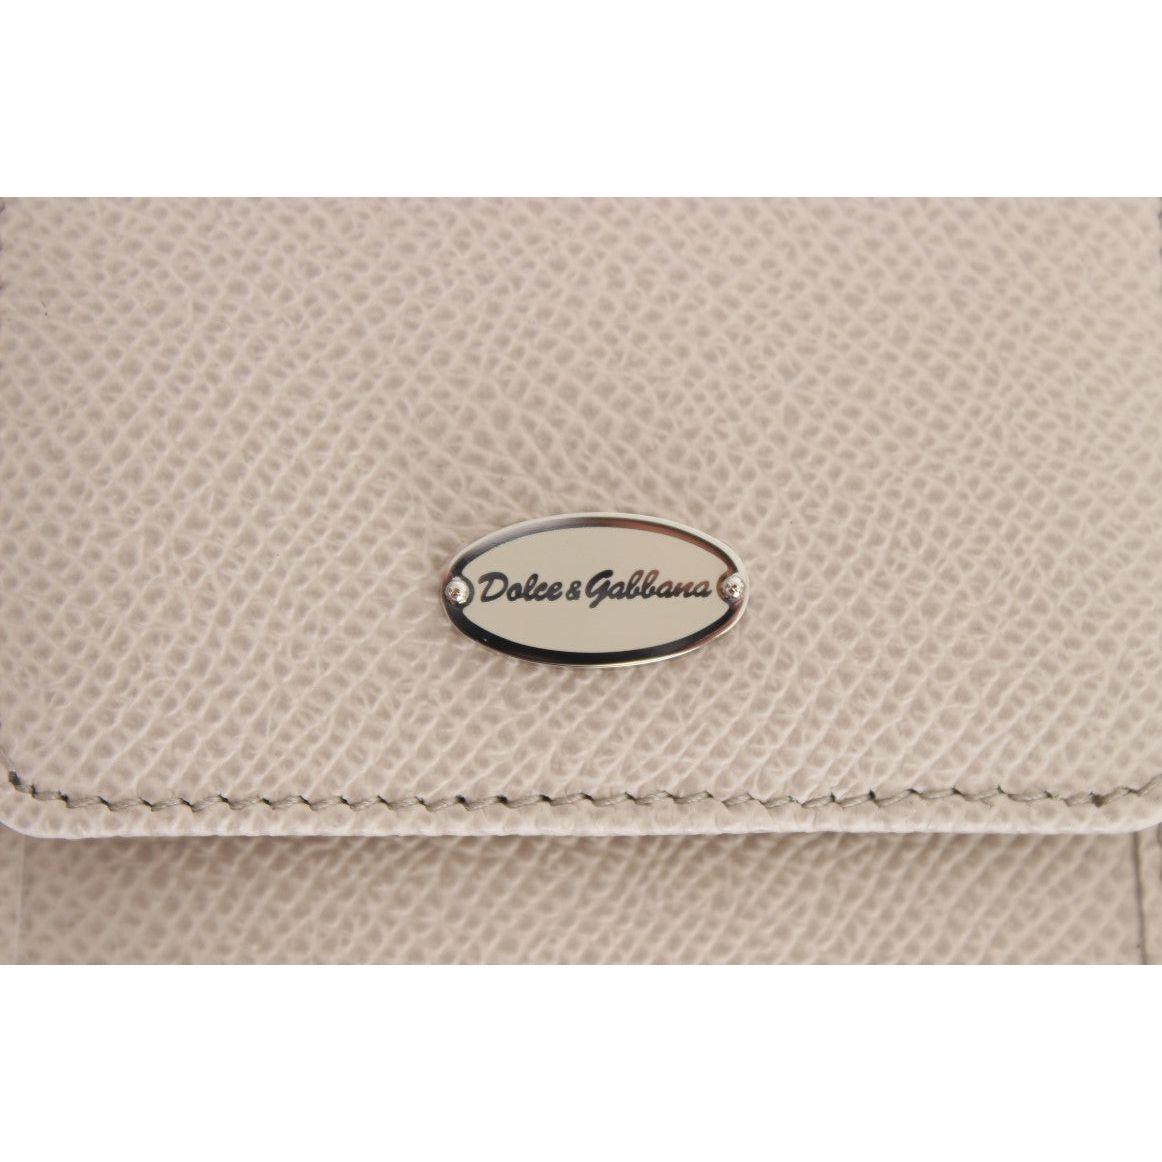 Dolce & Gabbana Sleek White Leather Condom Case Wallet white-dauphine-leather-case-wallet Wallet 518018-white-dauphine-leather-case-wallet-3.jpg